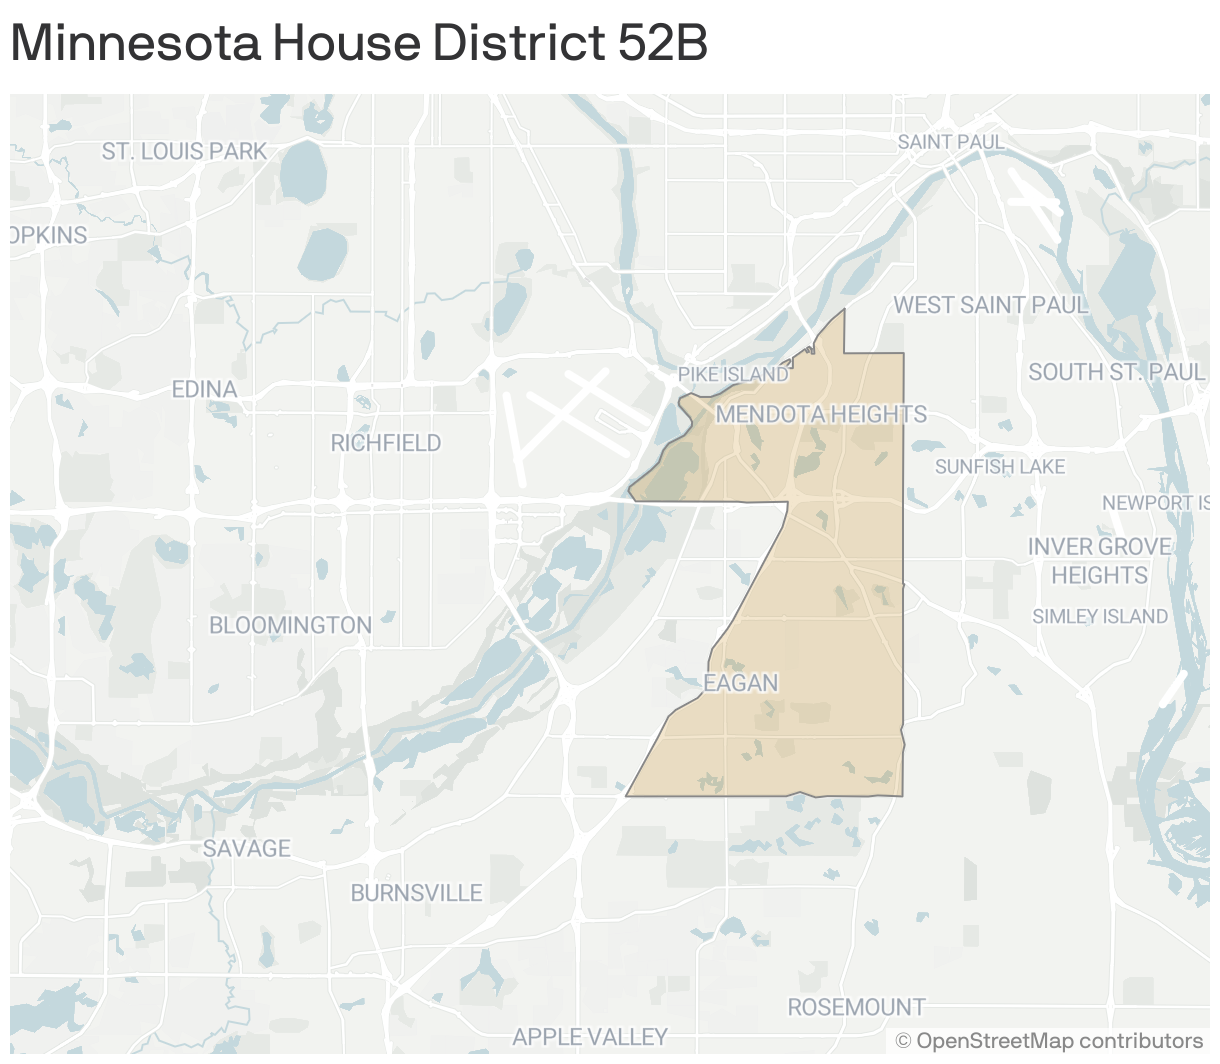 Minnesota House District 52B